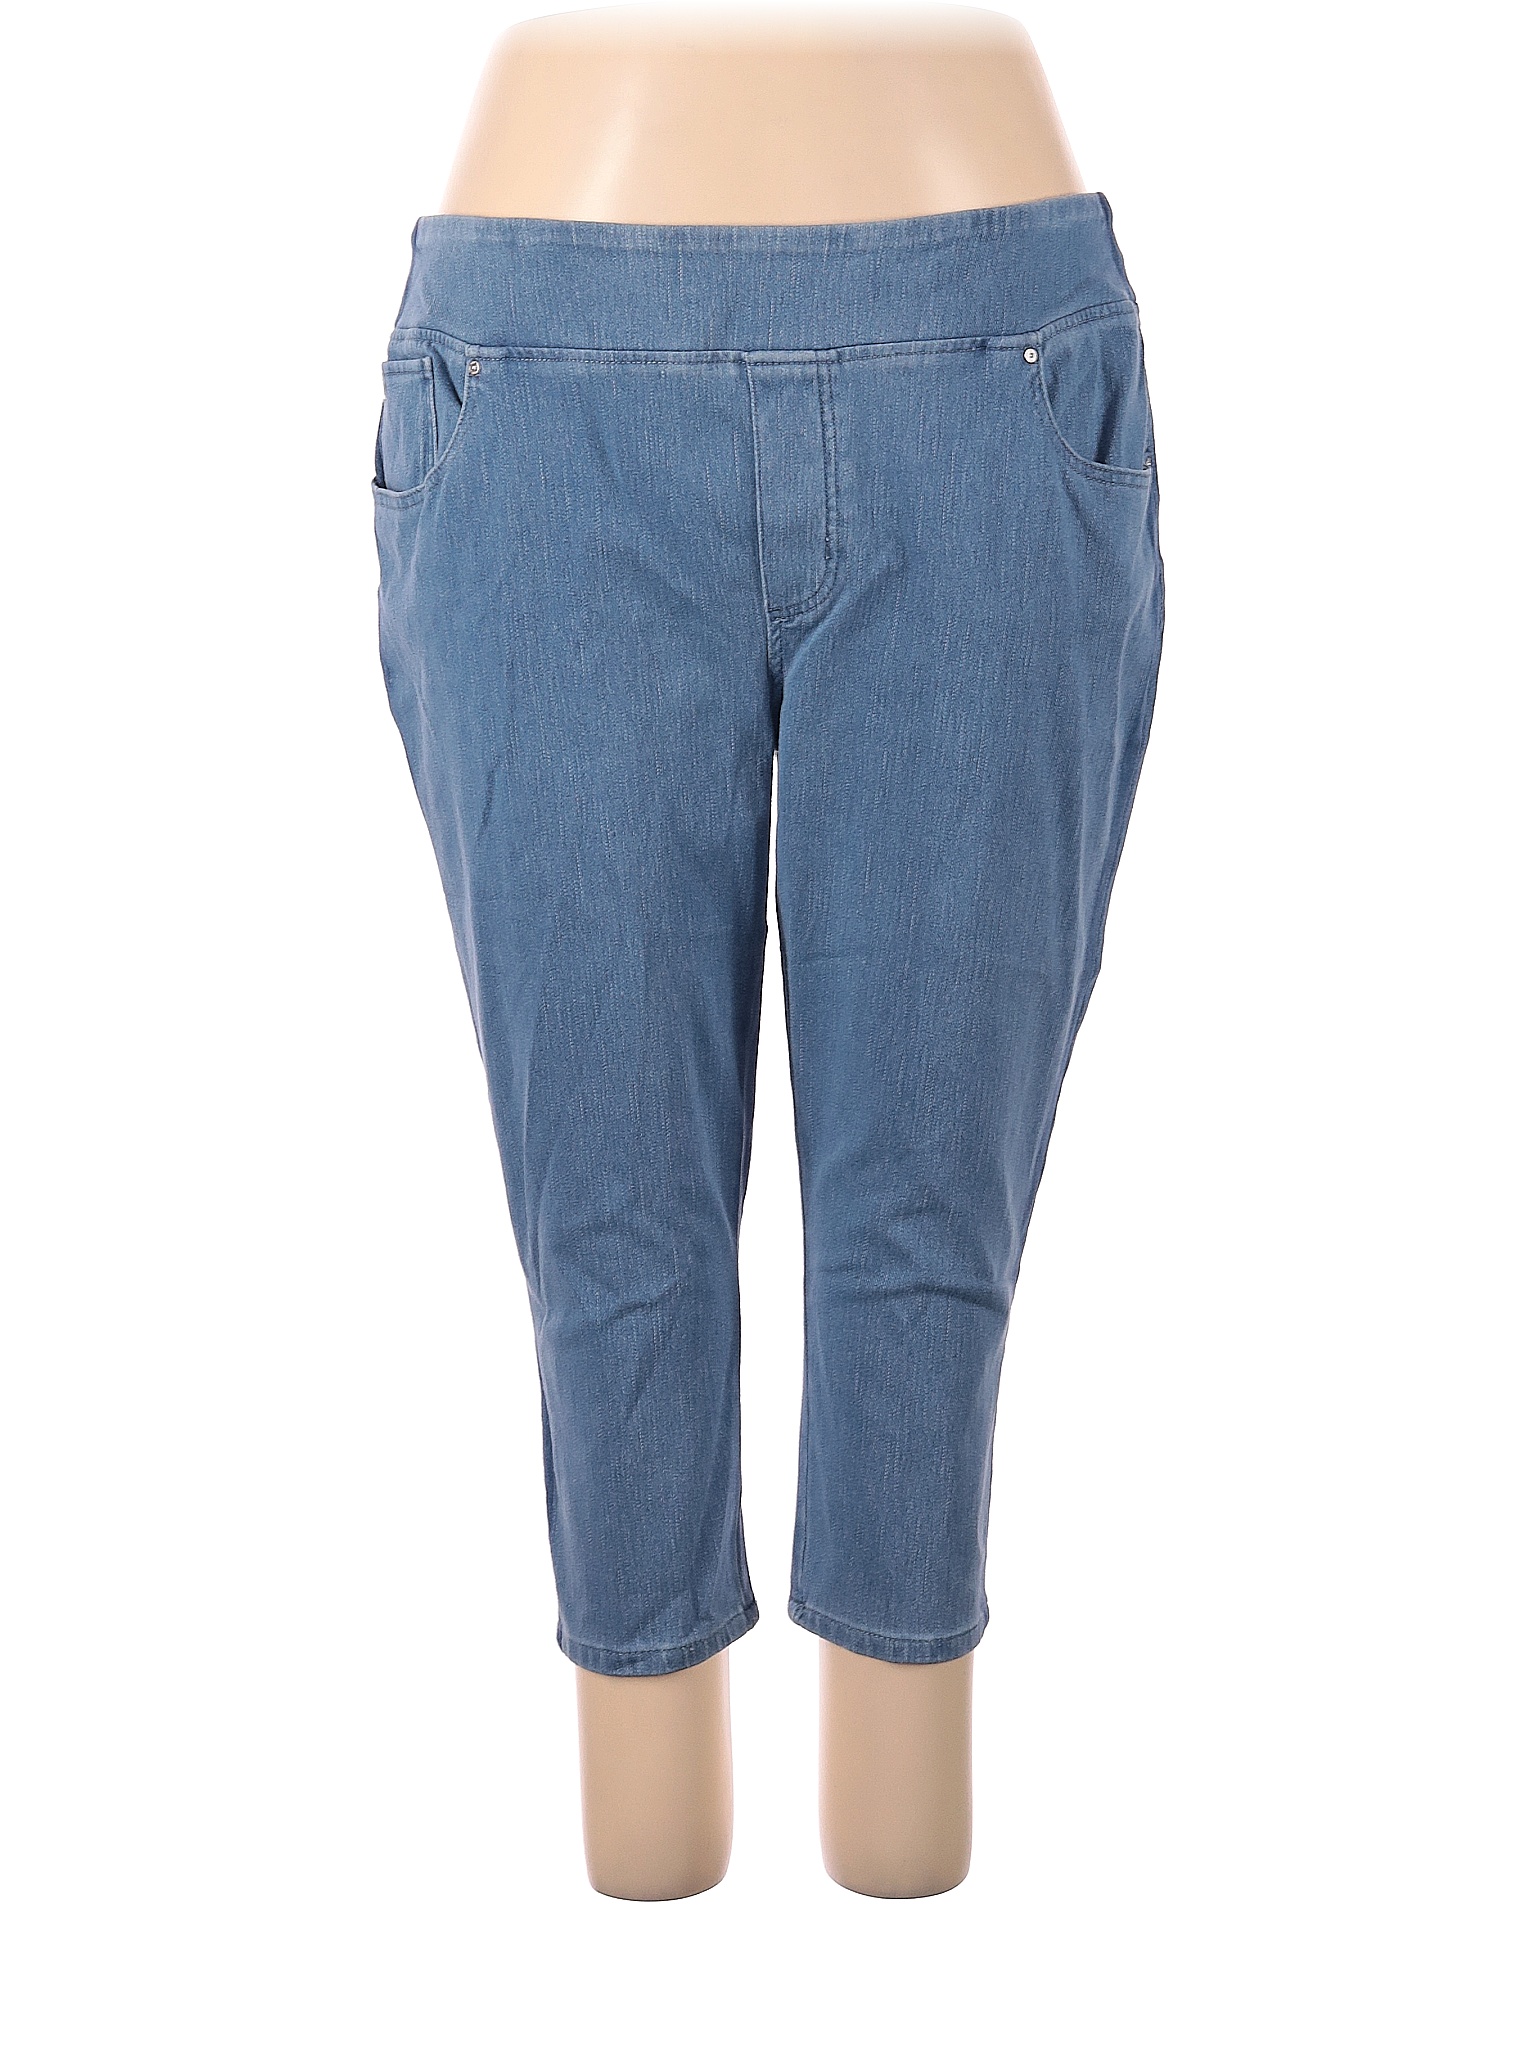 Belle By Kim Gravel Blue Jeans Size 26 (Plus) - 65% off | thredUP